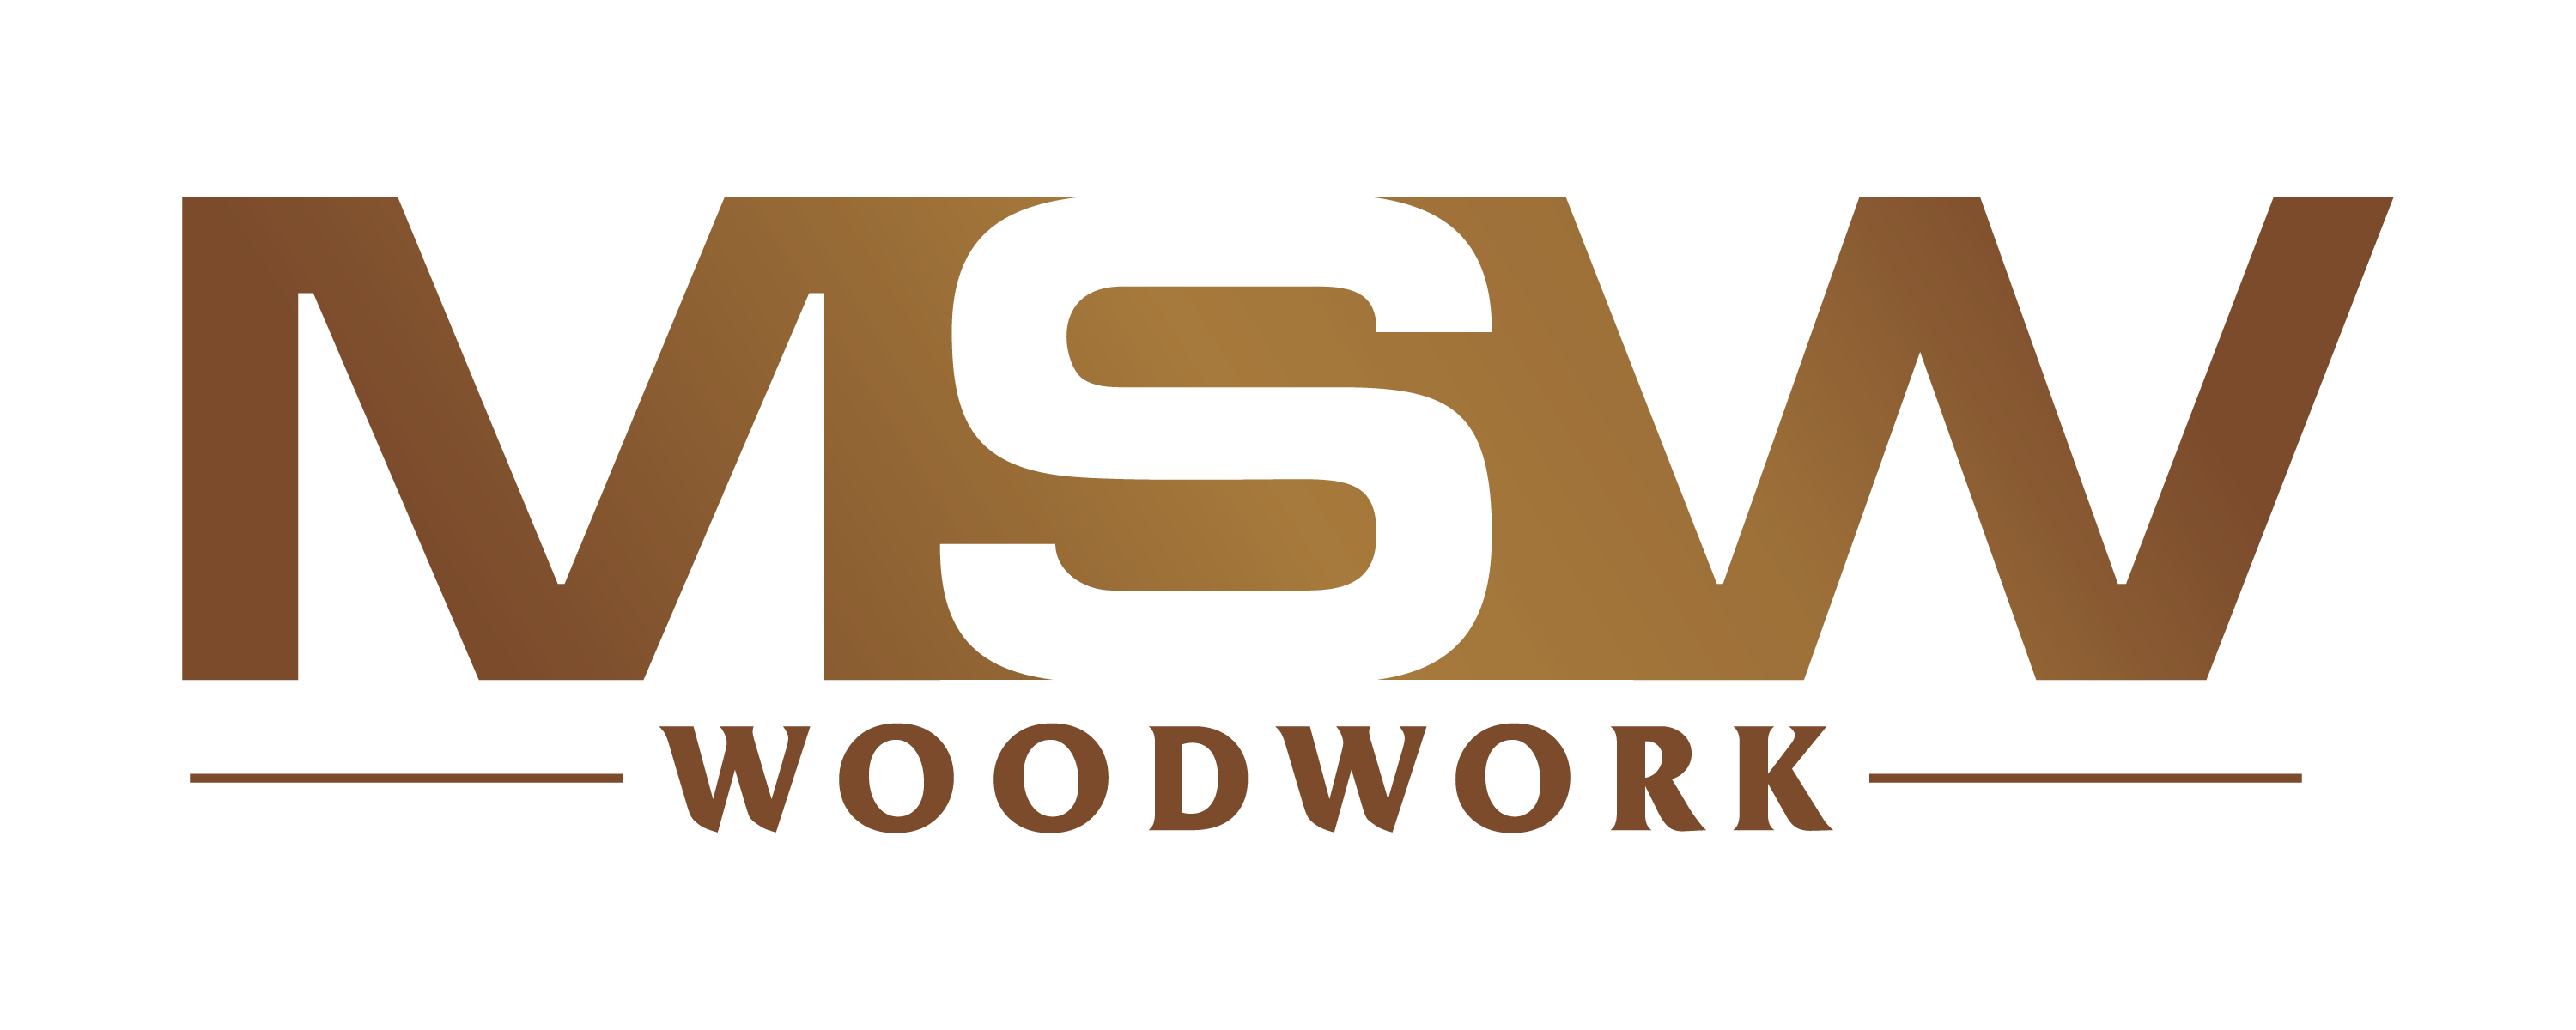 ProSites-MSW Woodwork-01